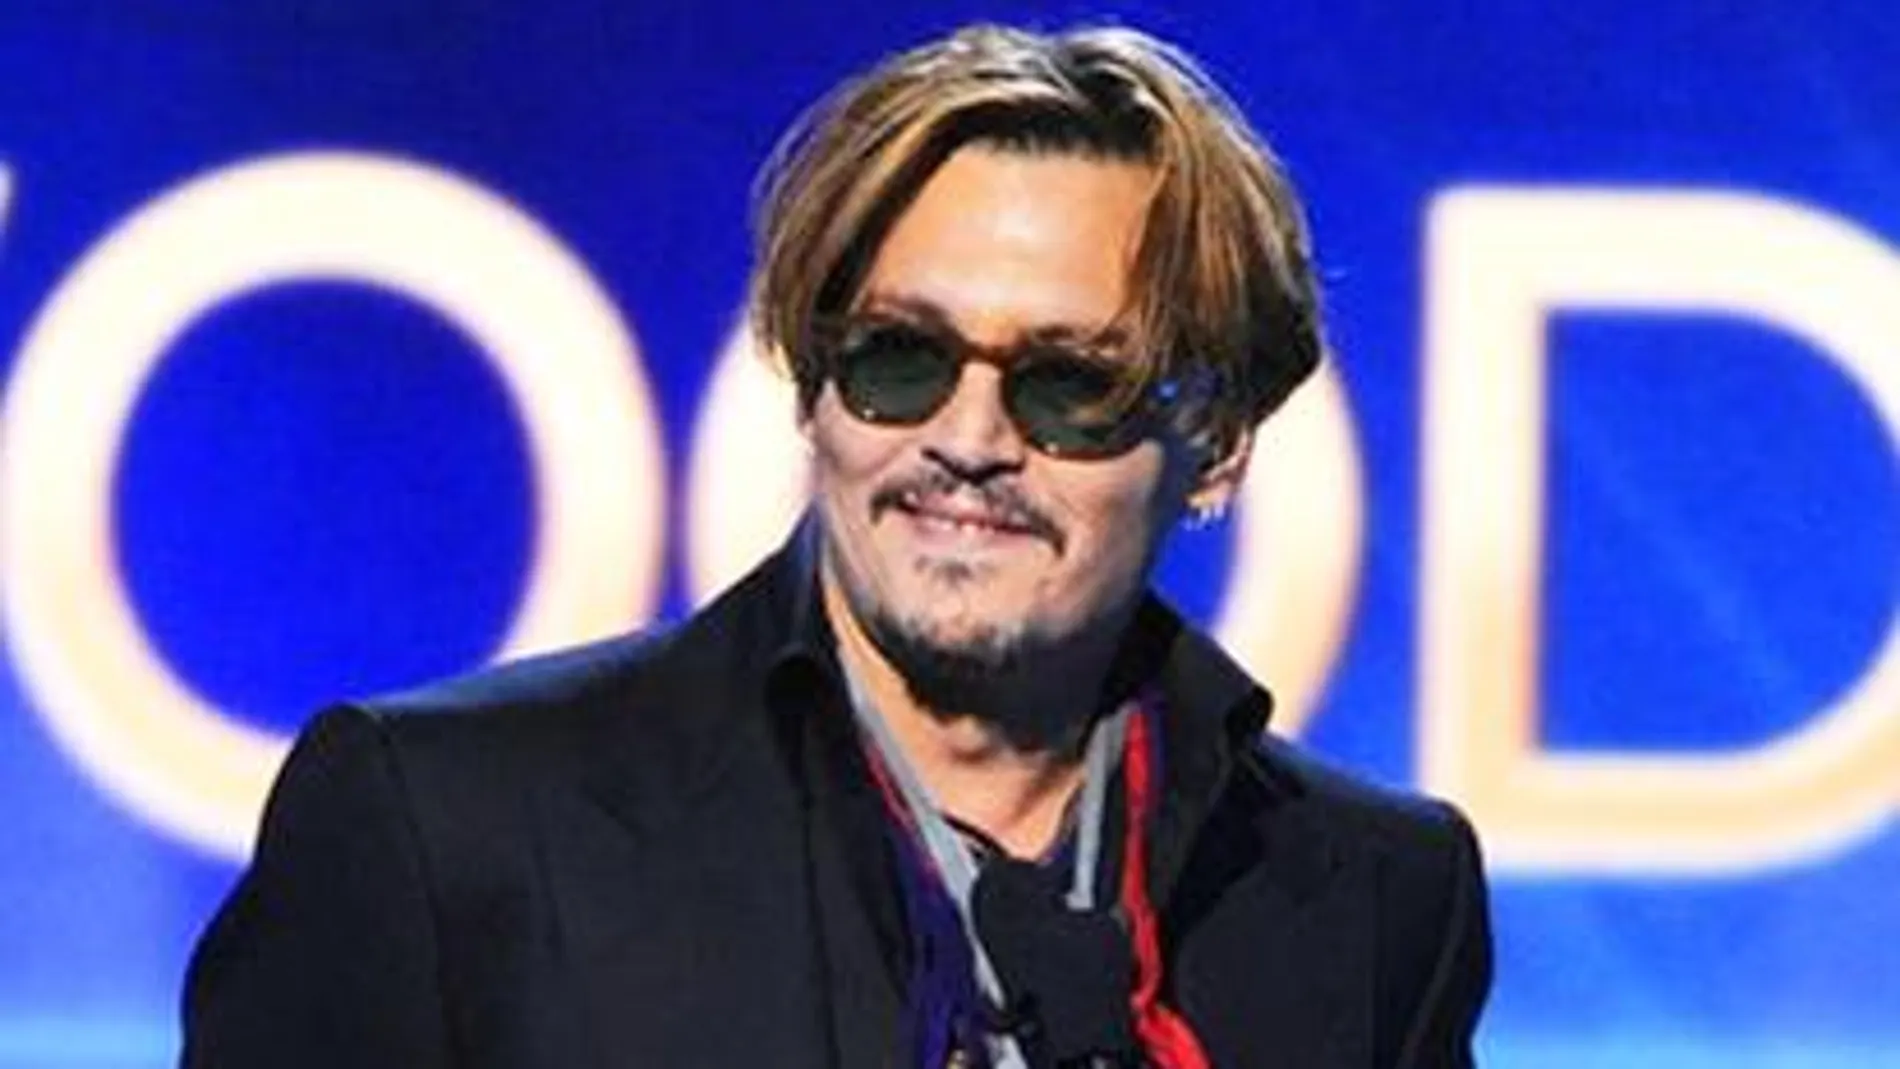 Johnny Depp entrega un premio en Hollywood visiblemente borracho